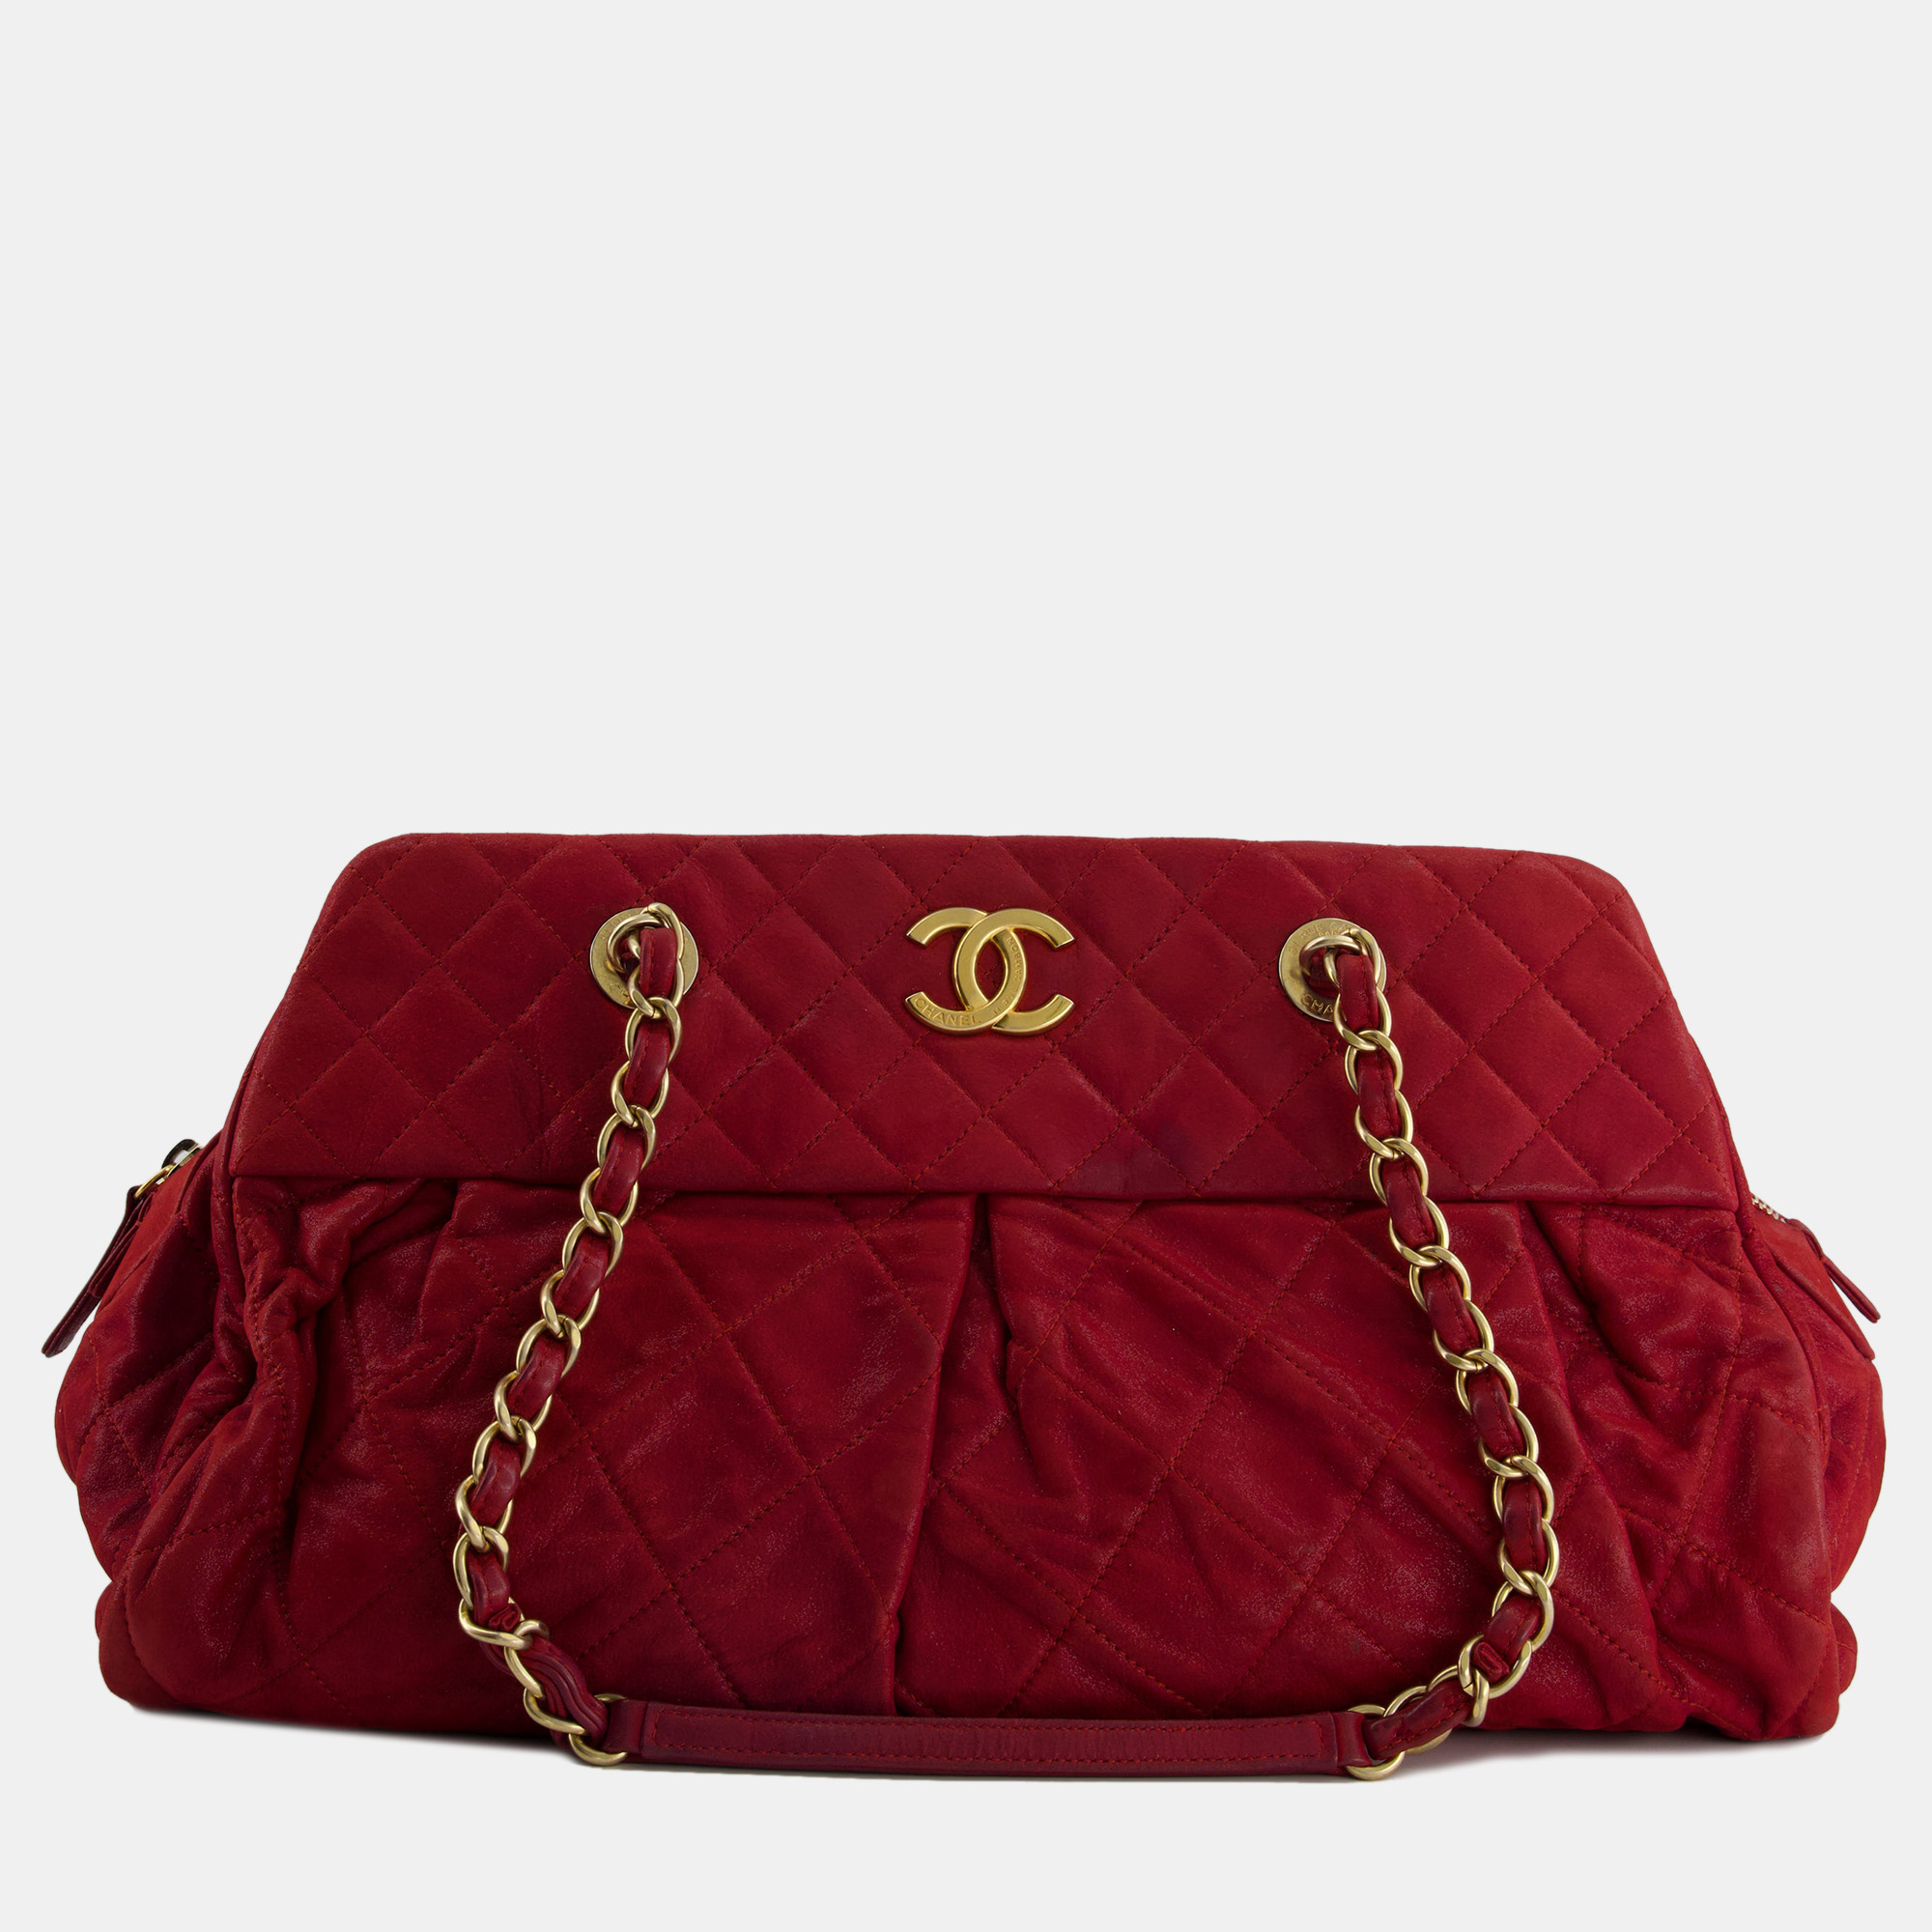 Chanel burgundy mademoiselle shoulder bag in nubuck leather and gold hardware